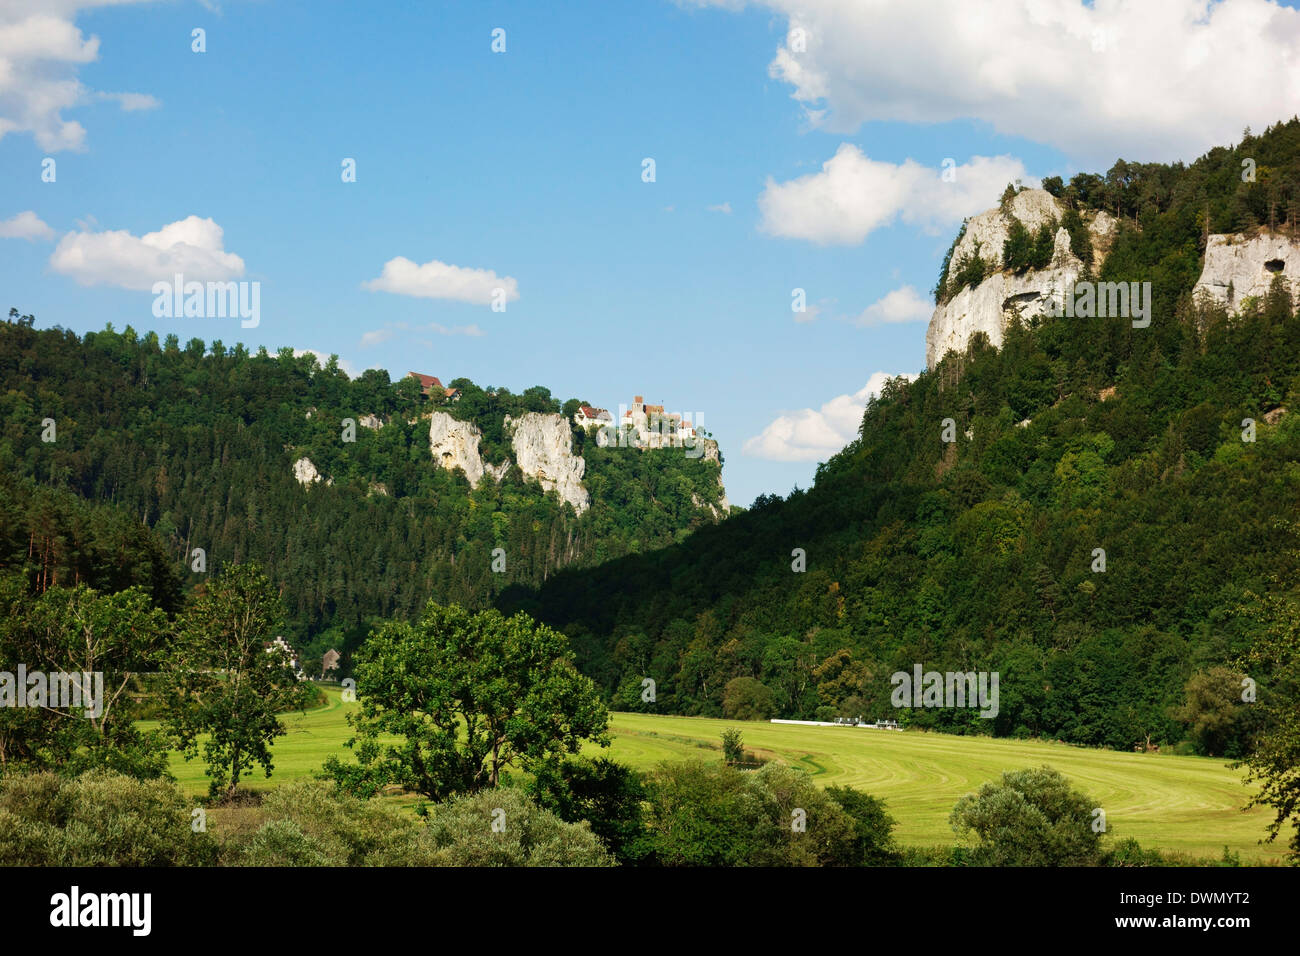 Avis de Donautal (vallée du Danube), Schaufelsen Werenwag et château, Jura souabe, Baden-Wurttemberg, Germany, Europe Banque D'Images